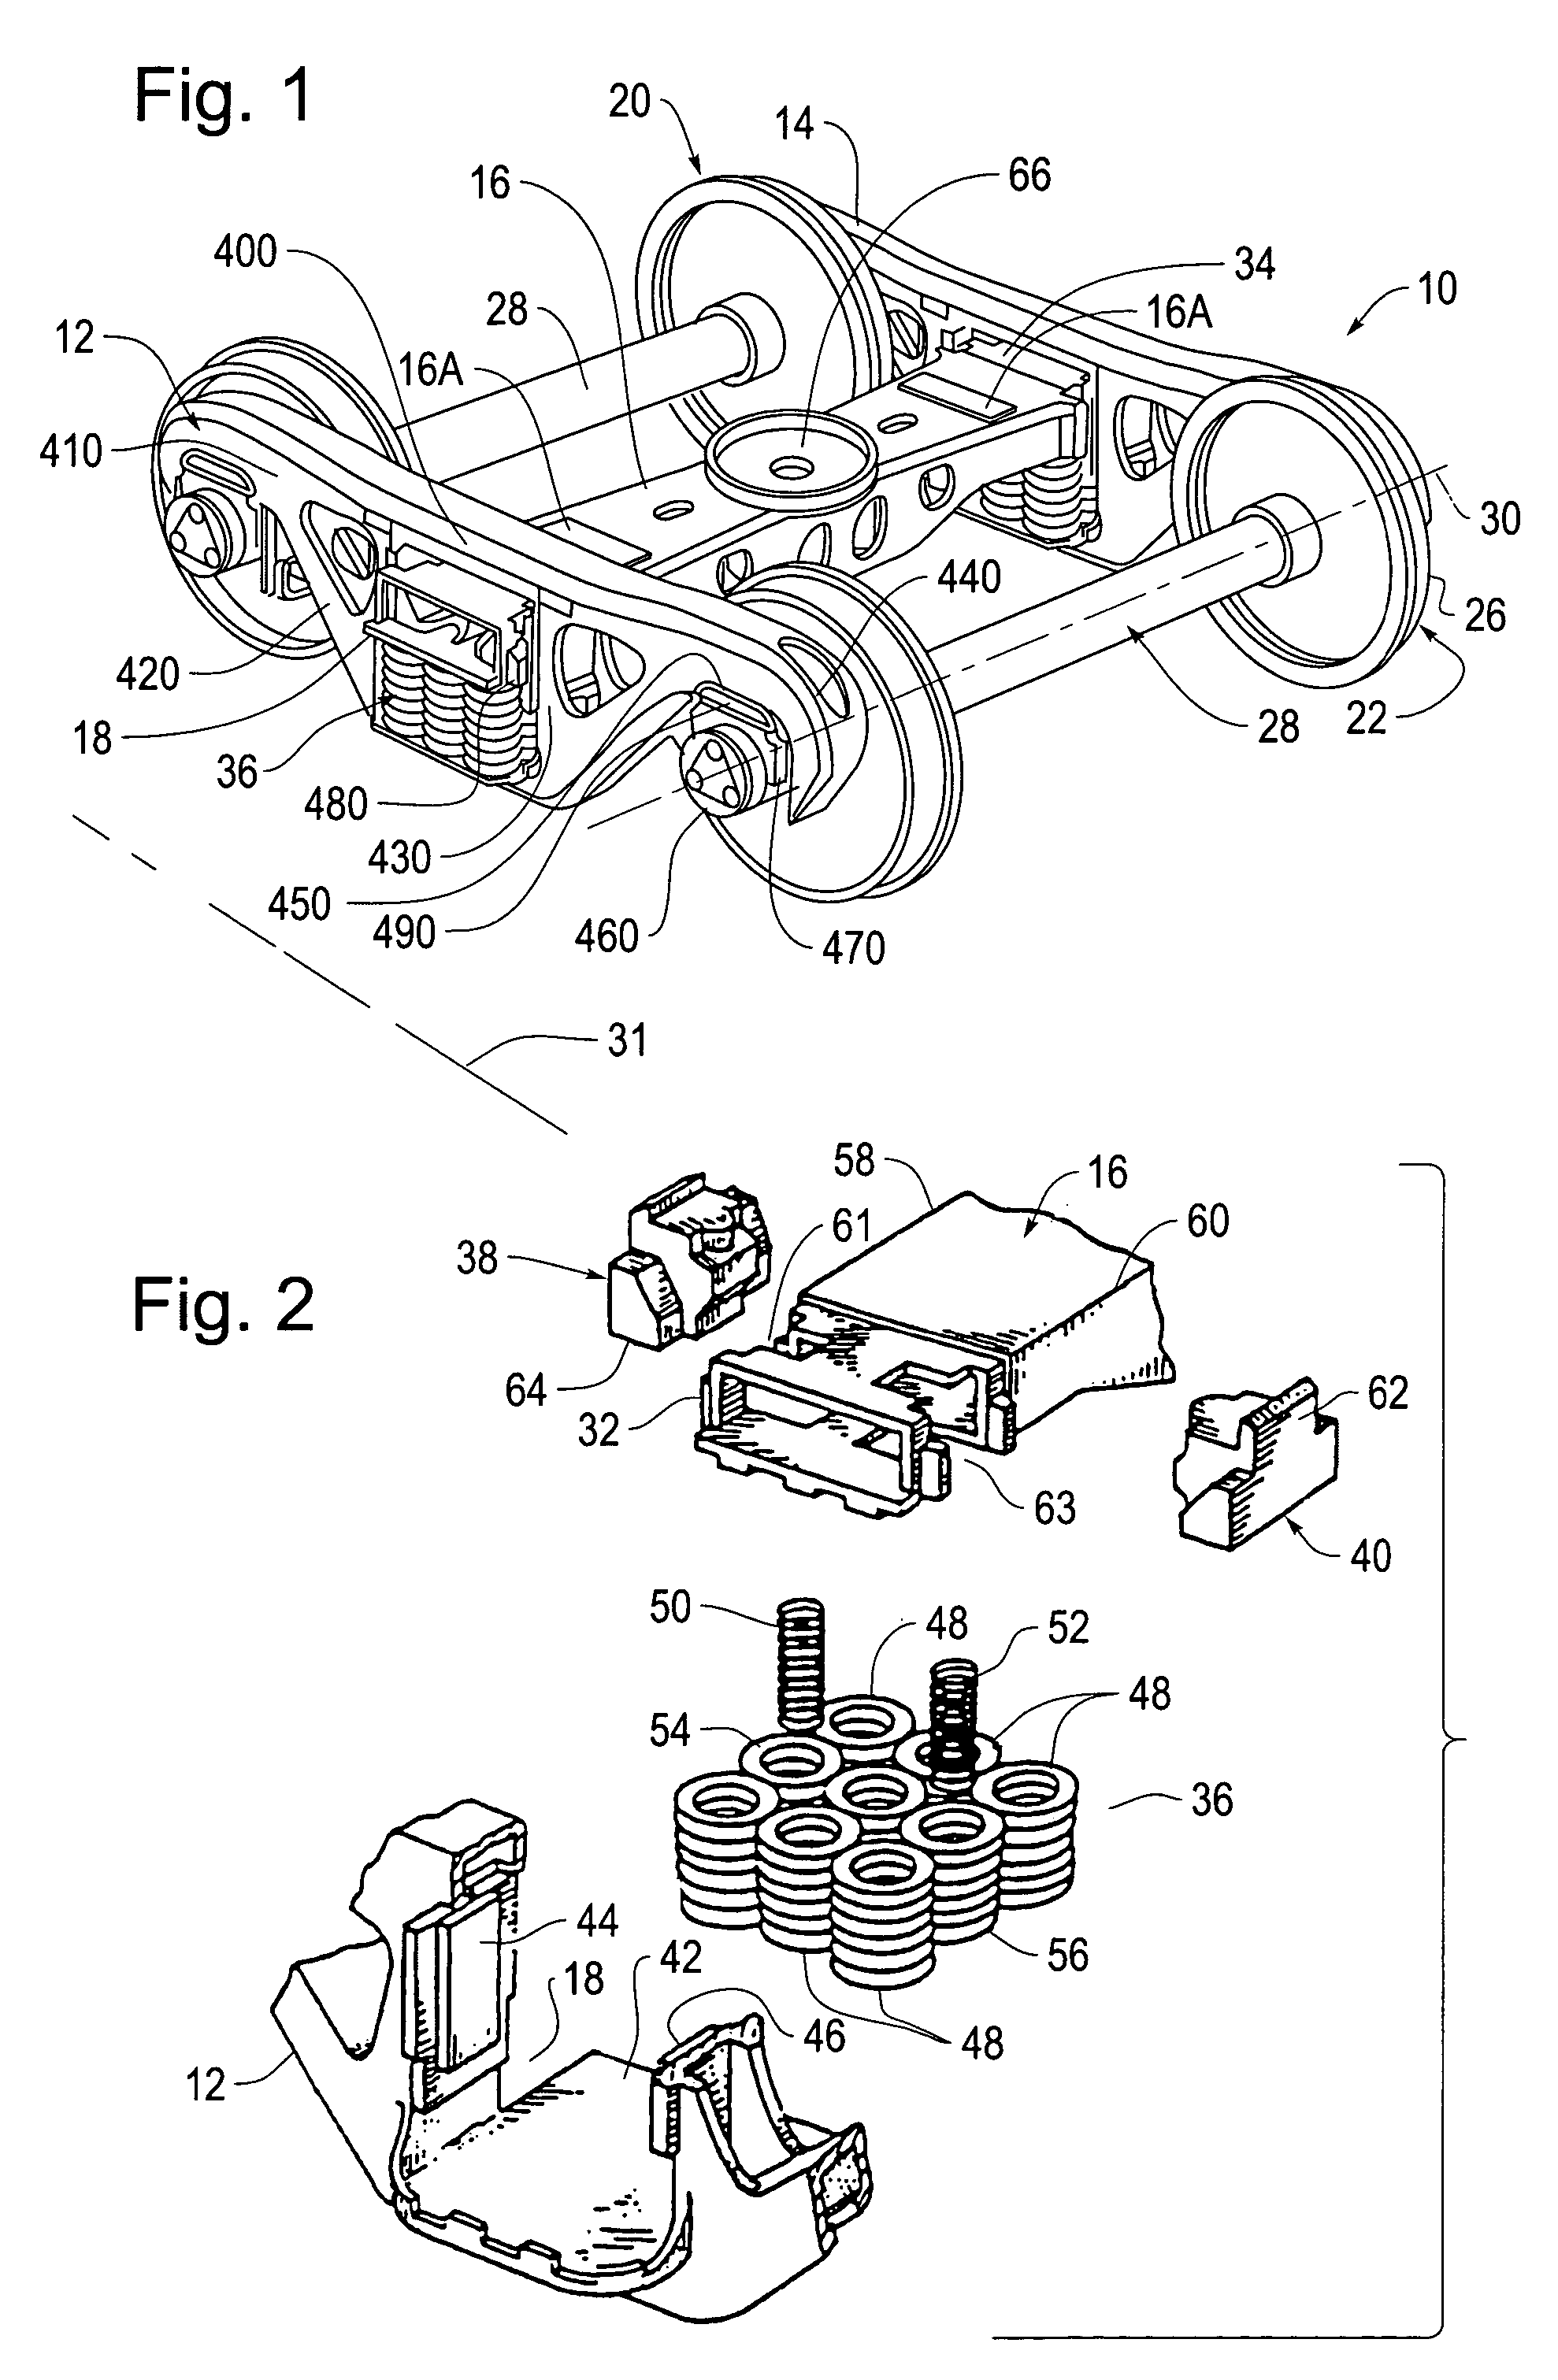 Three-piece motion control truck system